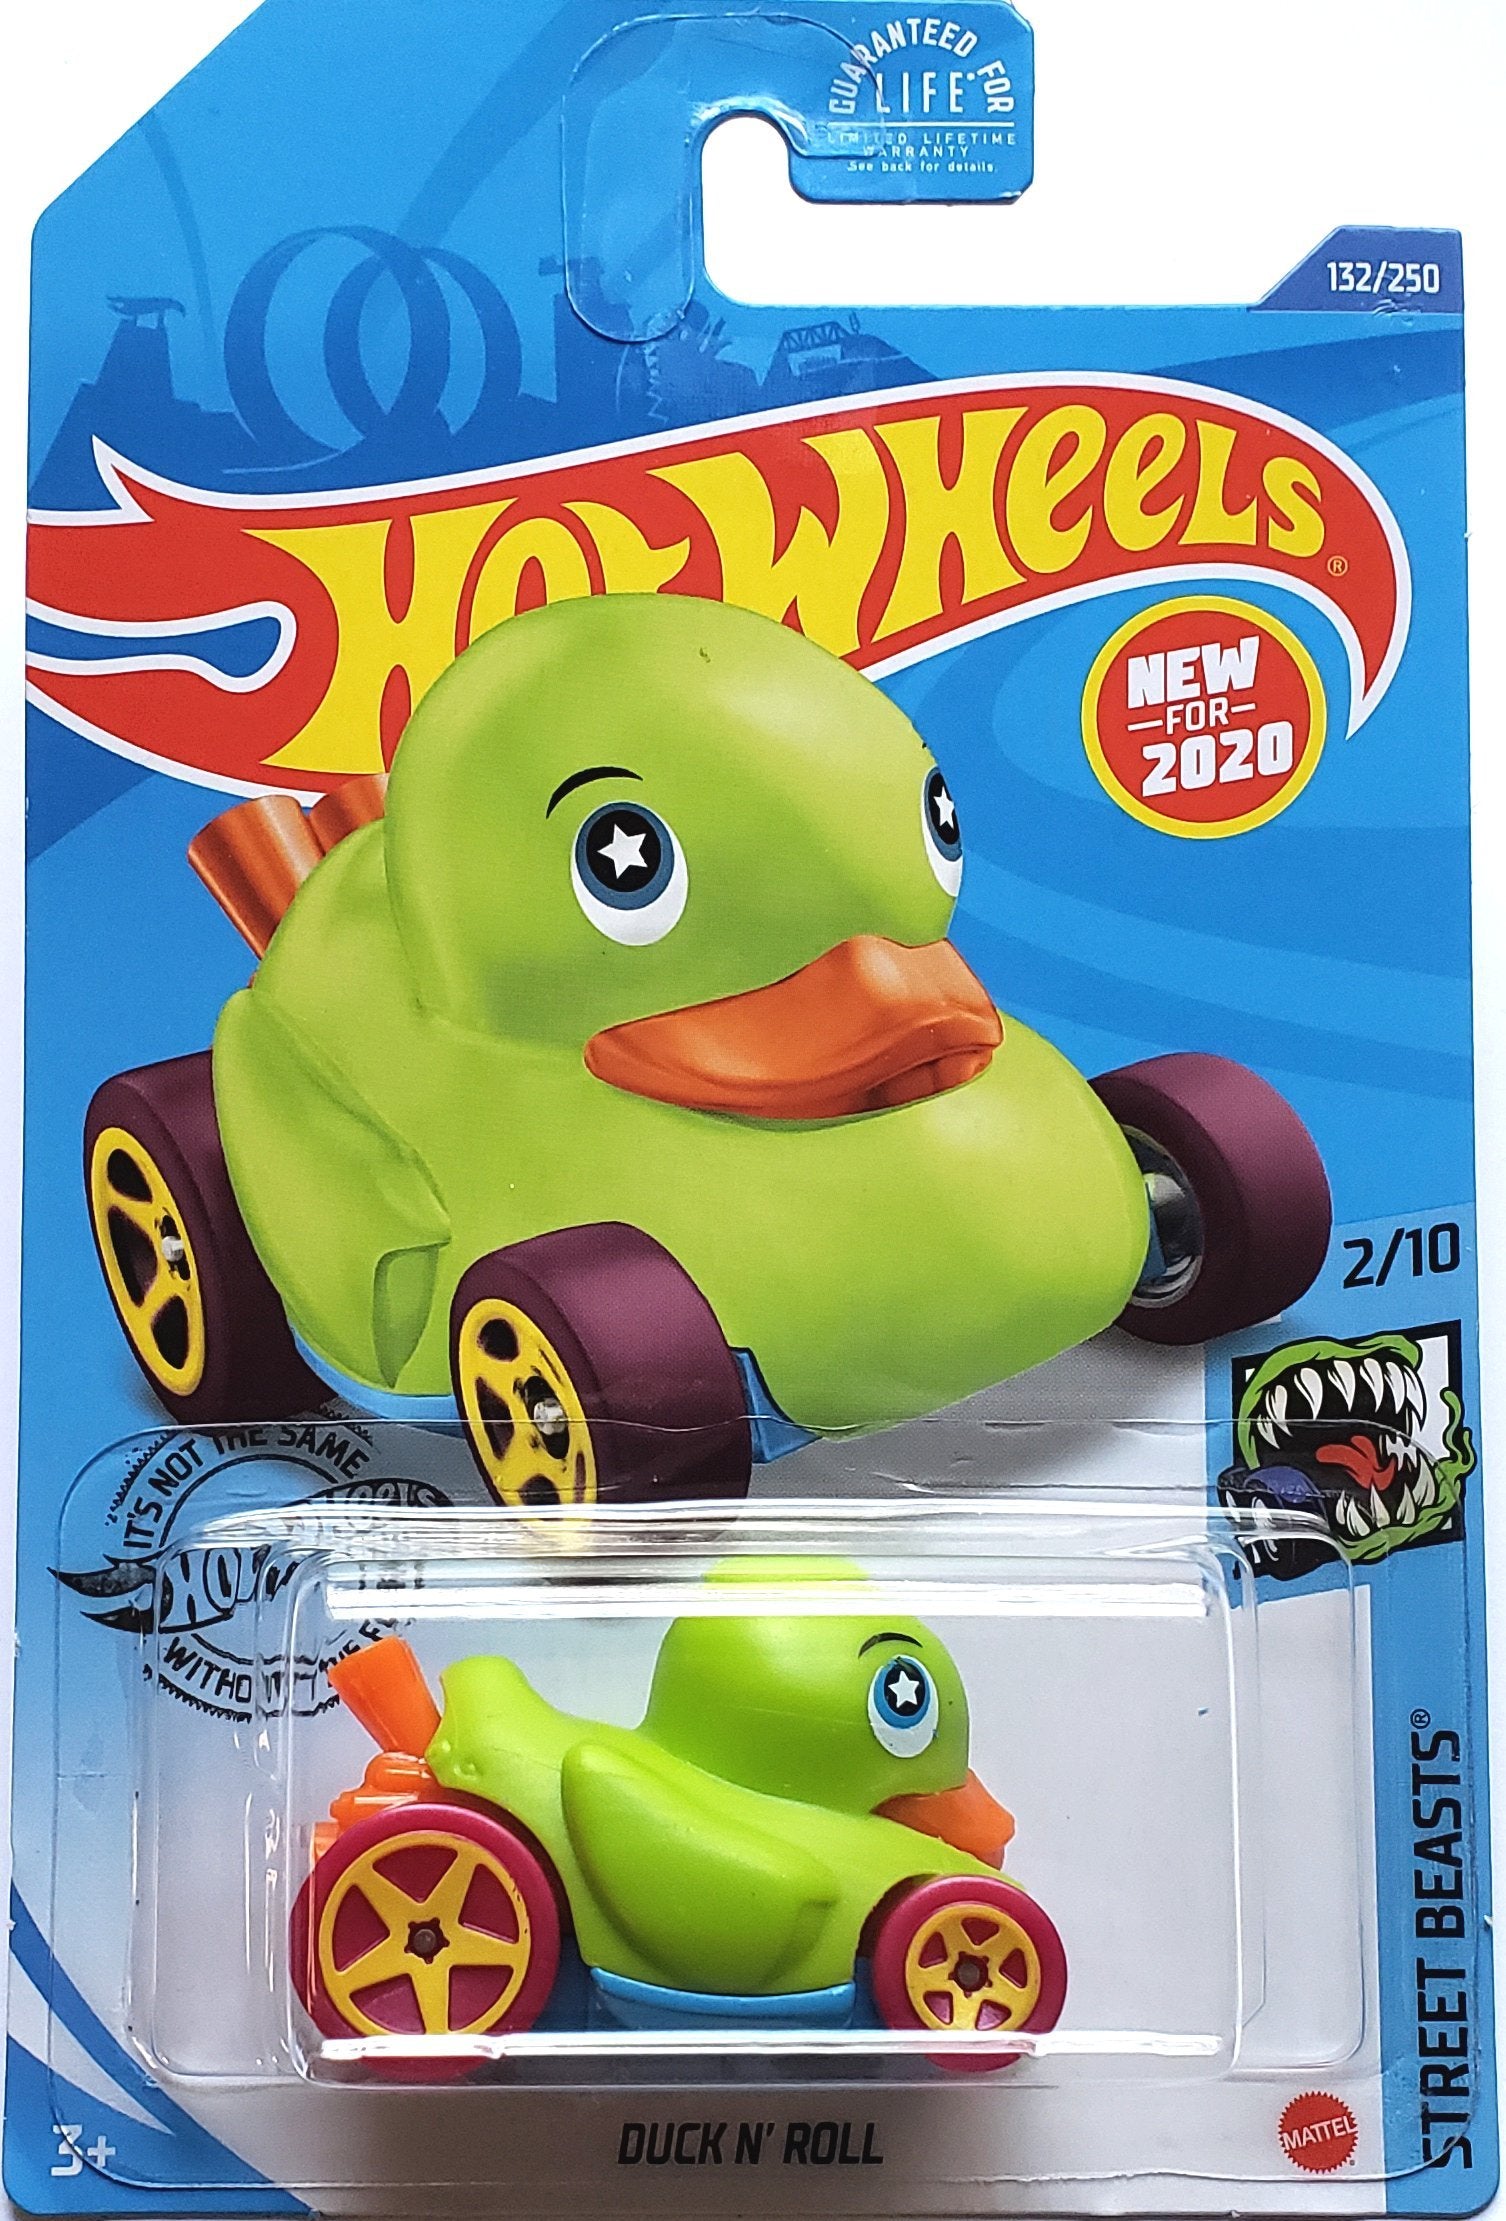 2020 Hot Wheels Duck N' Roll Rubber Ducky Car Green GHF05 Street Beast